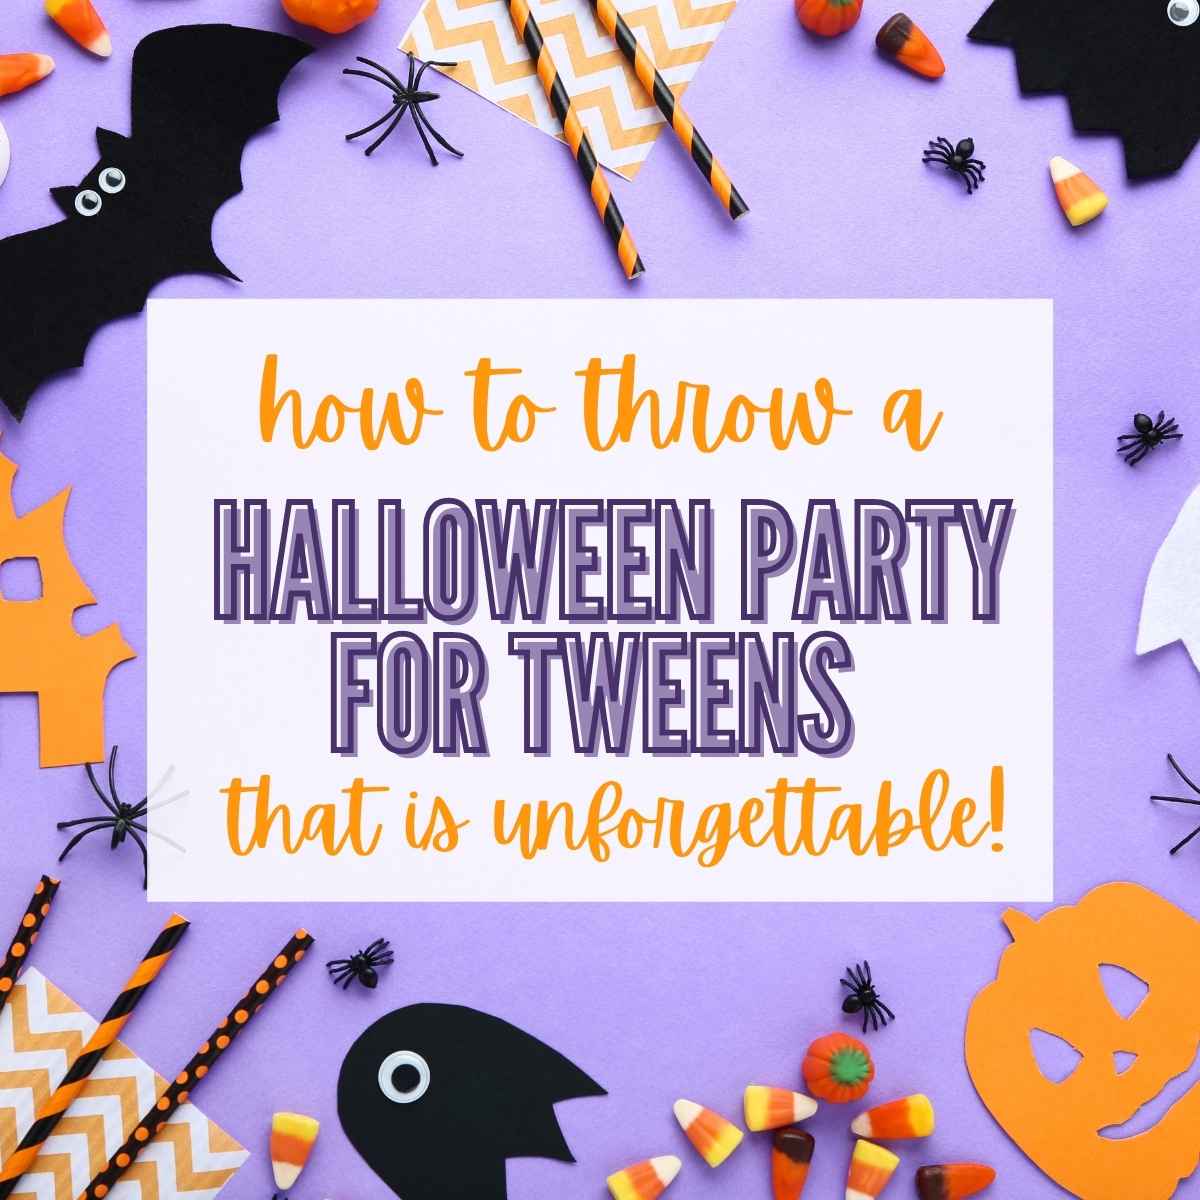 Fun Halloween Ideas for Tweens - The Chirping Moms